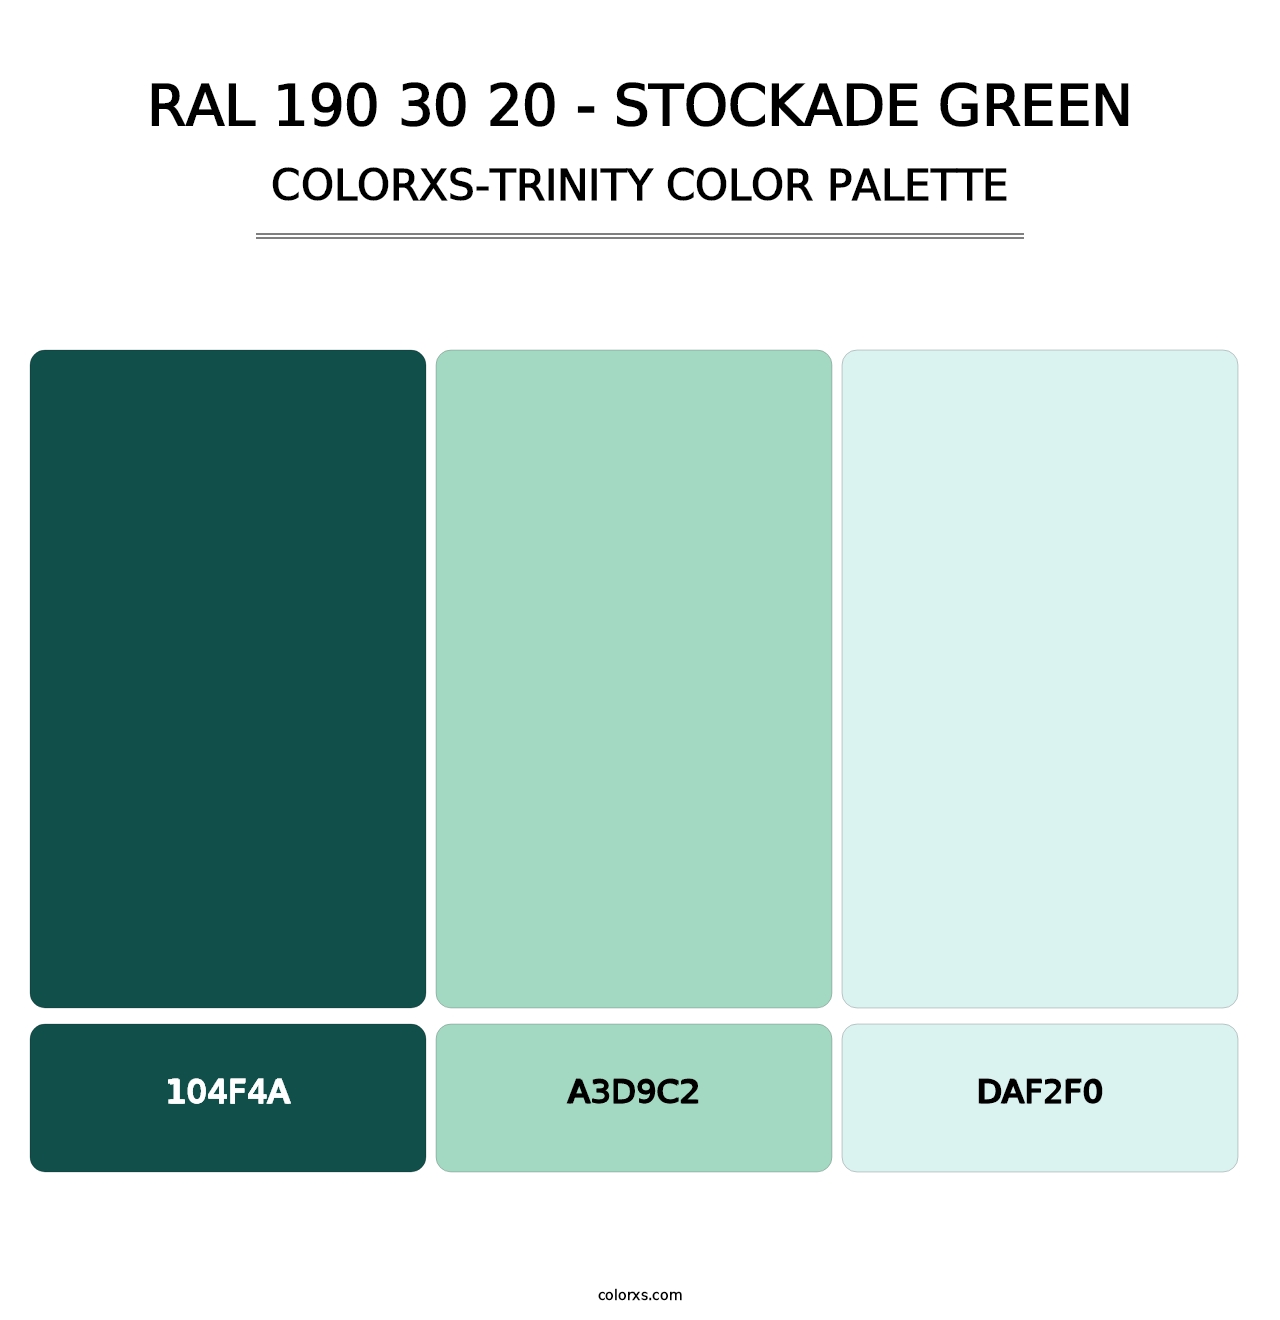 RAL 190 30 20 - Stockade Green - Colorxs Trinity Palette